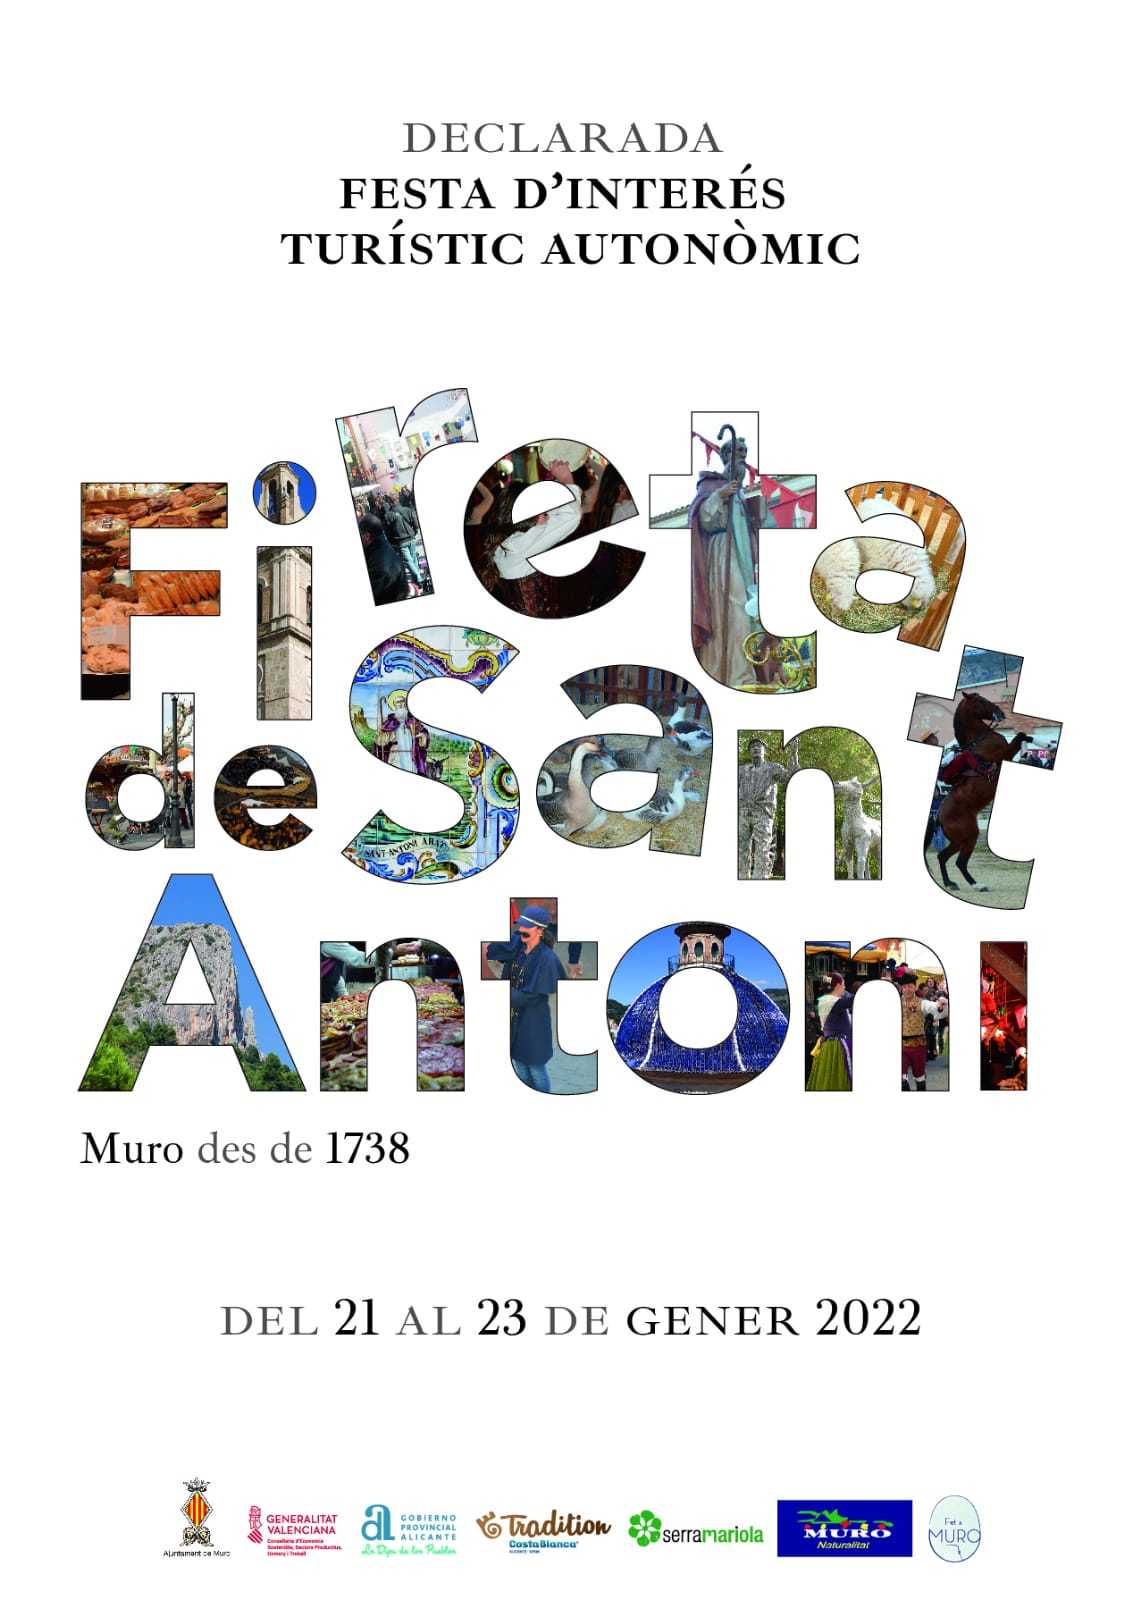 Fireta de Sant Antoni de Muro d'Alcoi - Declarada de Interés Turístic Autonòmic